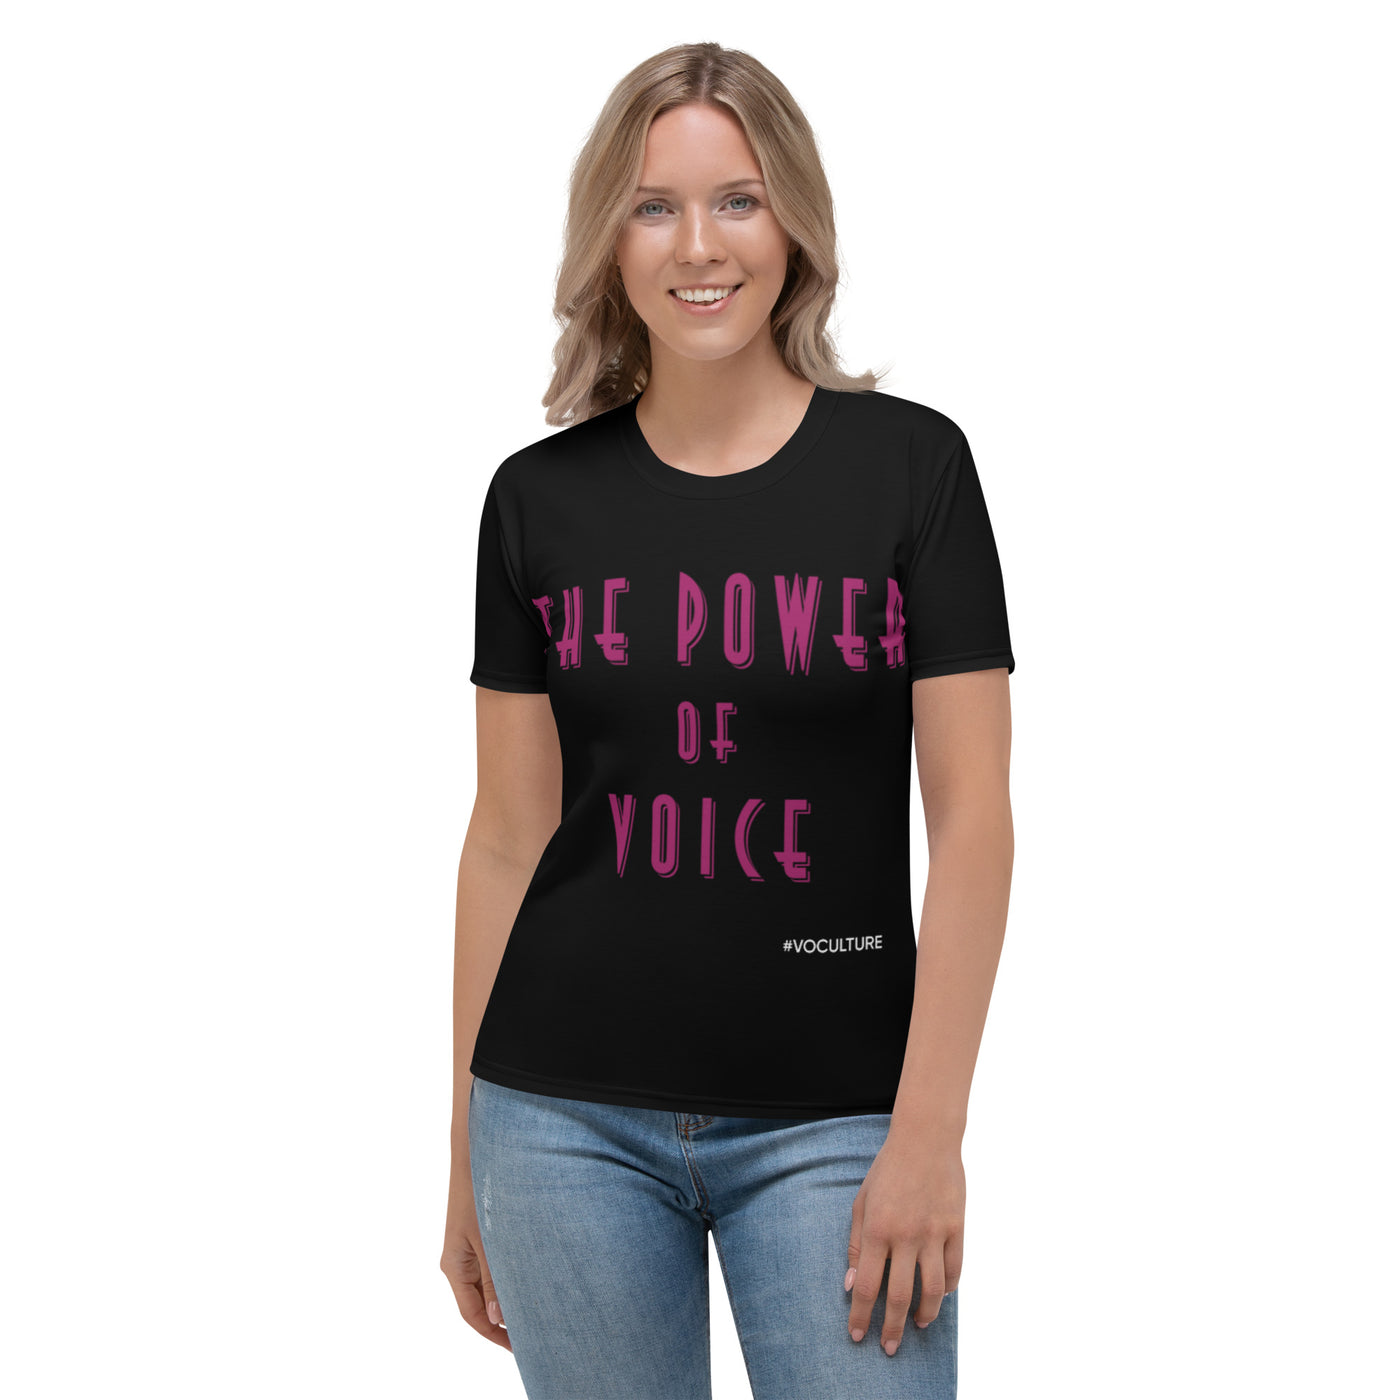 THE POWER OF VOICE Women's T-shirt